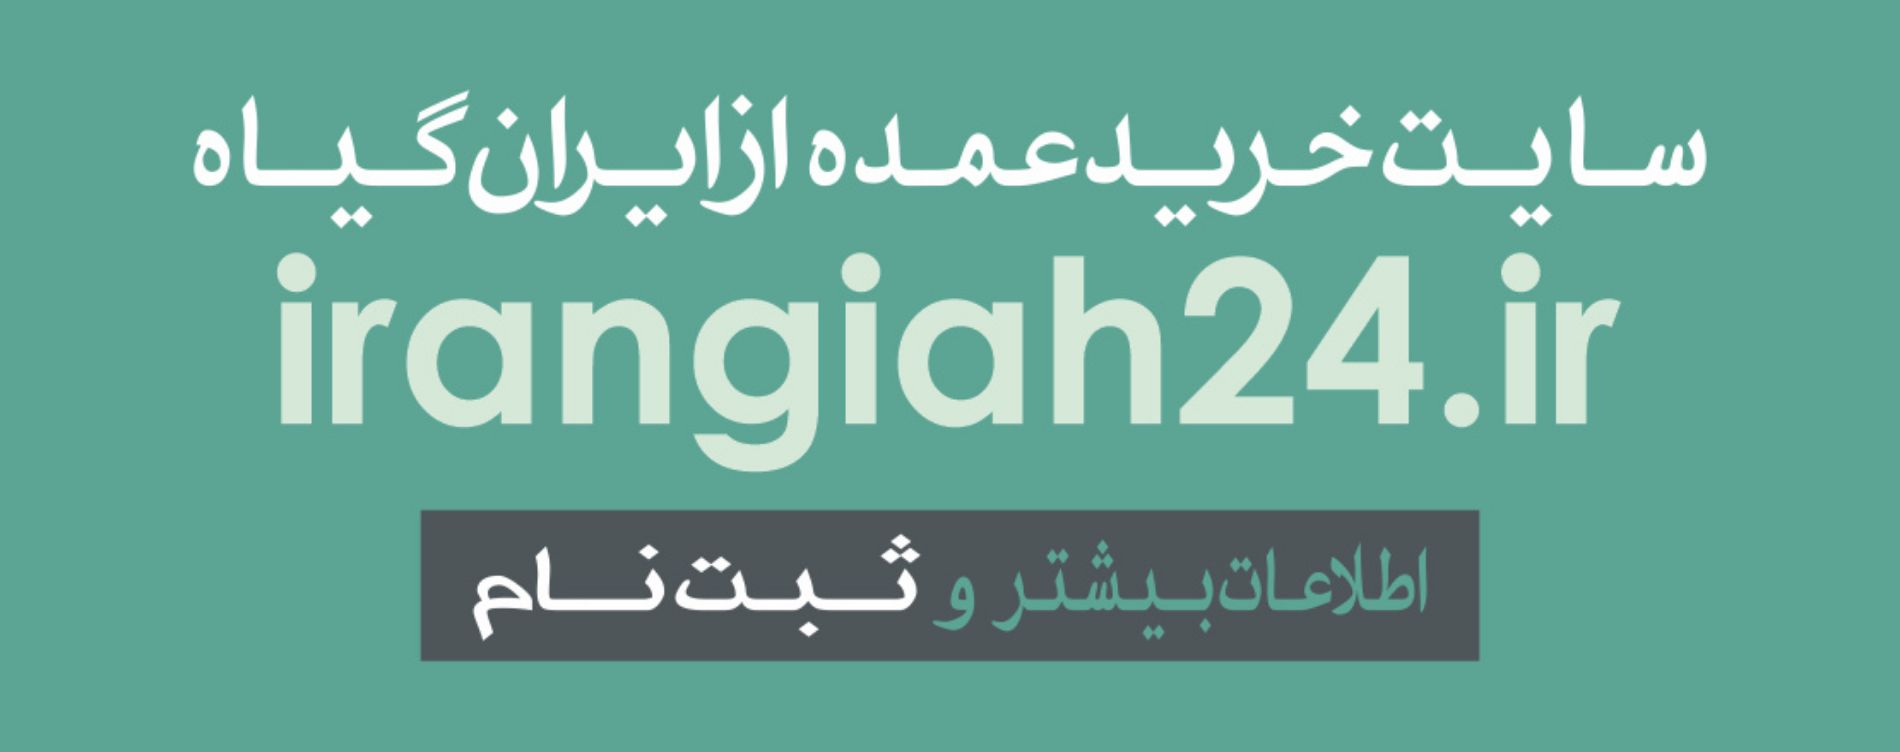 desktop banner ایران گیاه